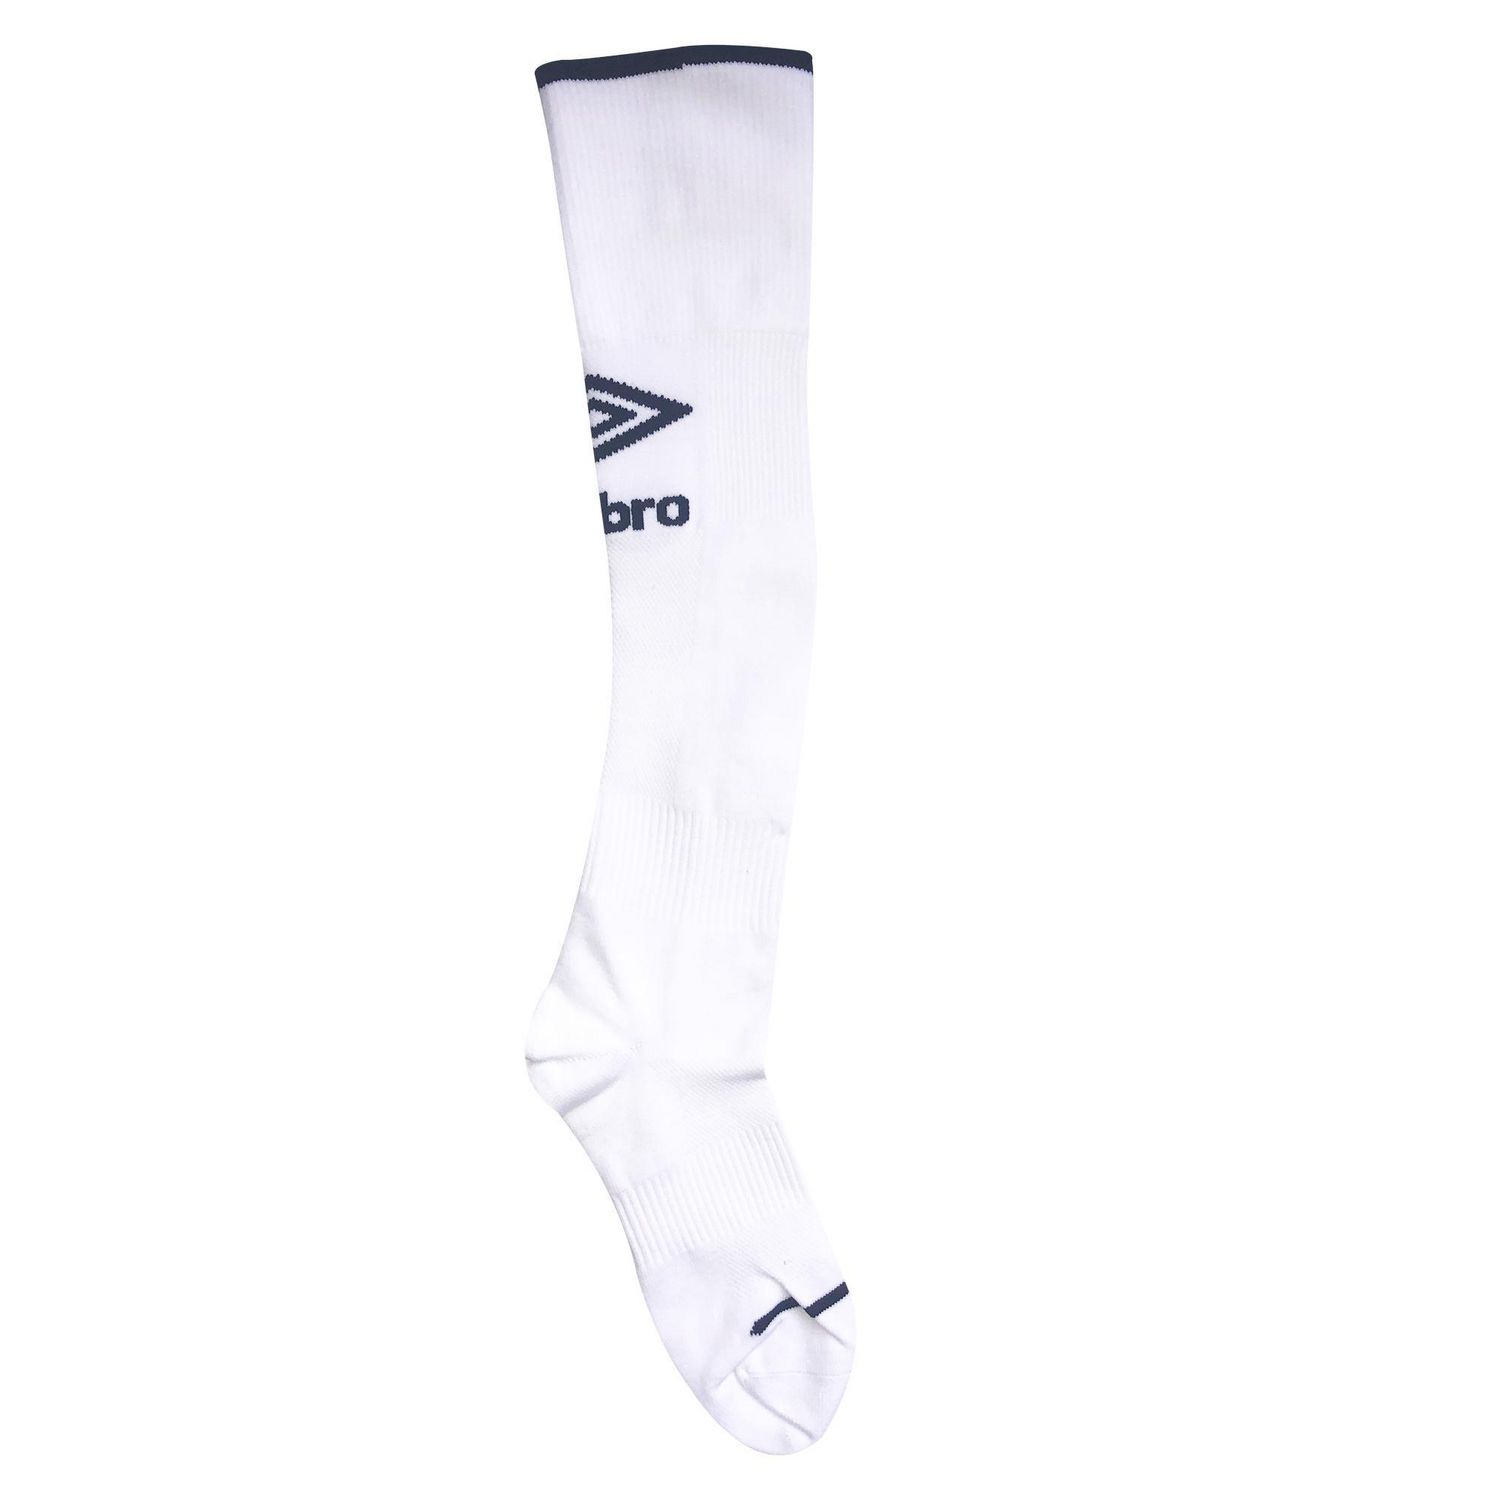 Umbro Club Soccer Socks 